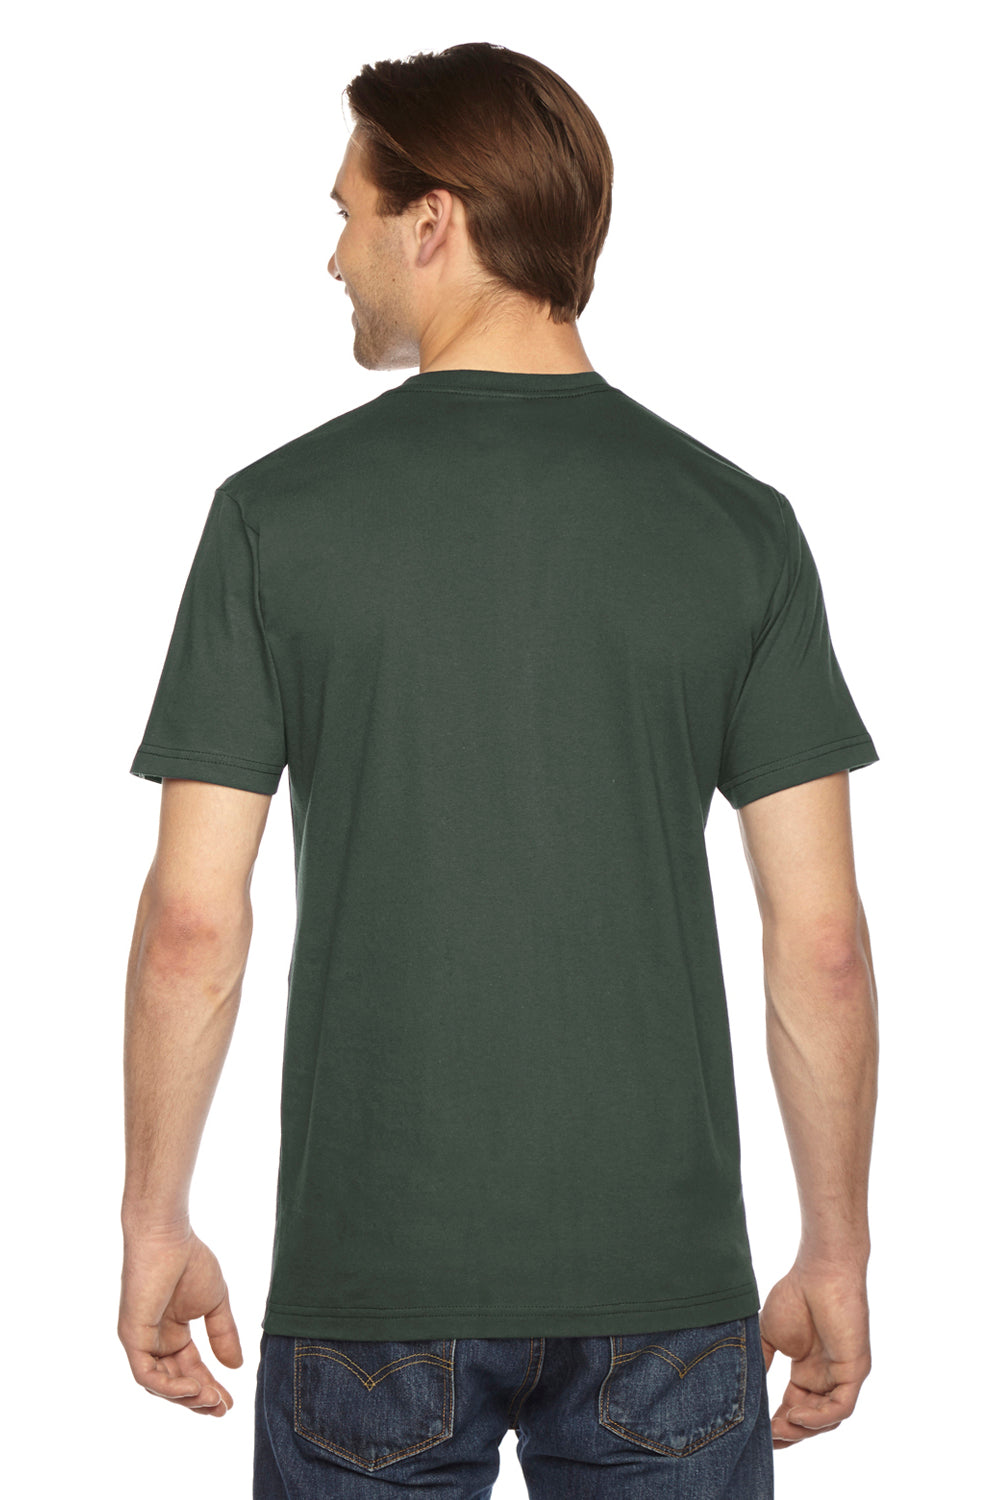 American Apparel 2001W Mens Fine Jersey Short Sleeve Crewneck T-Shirt Lieutenant Green Back